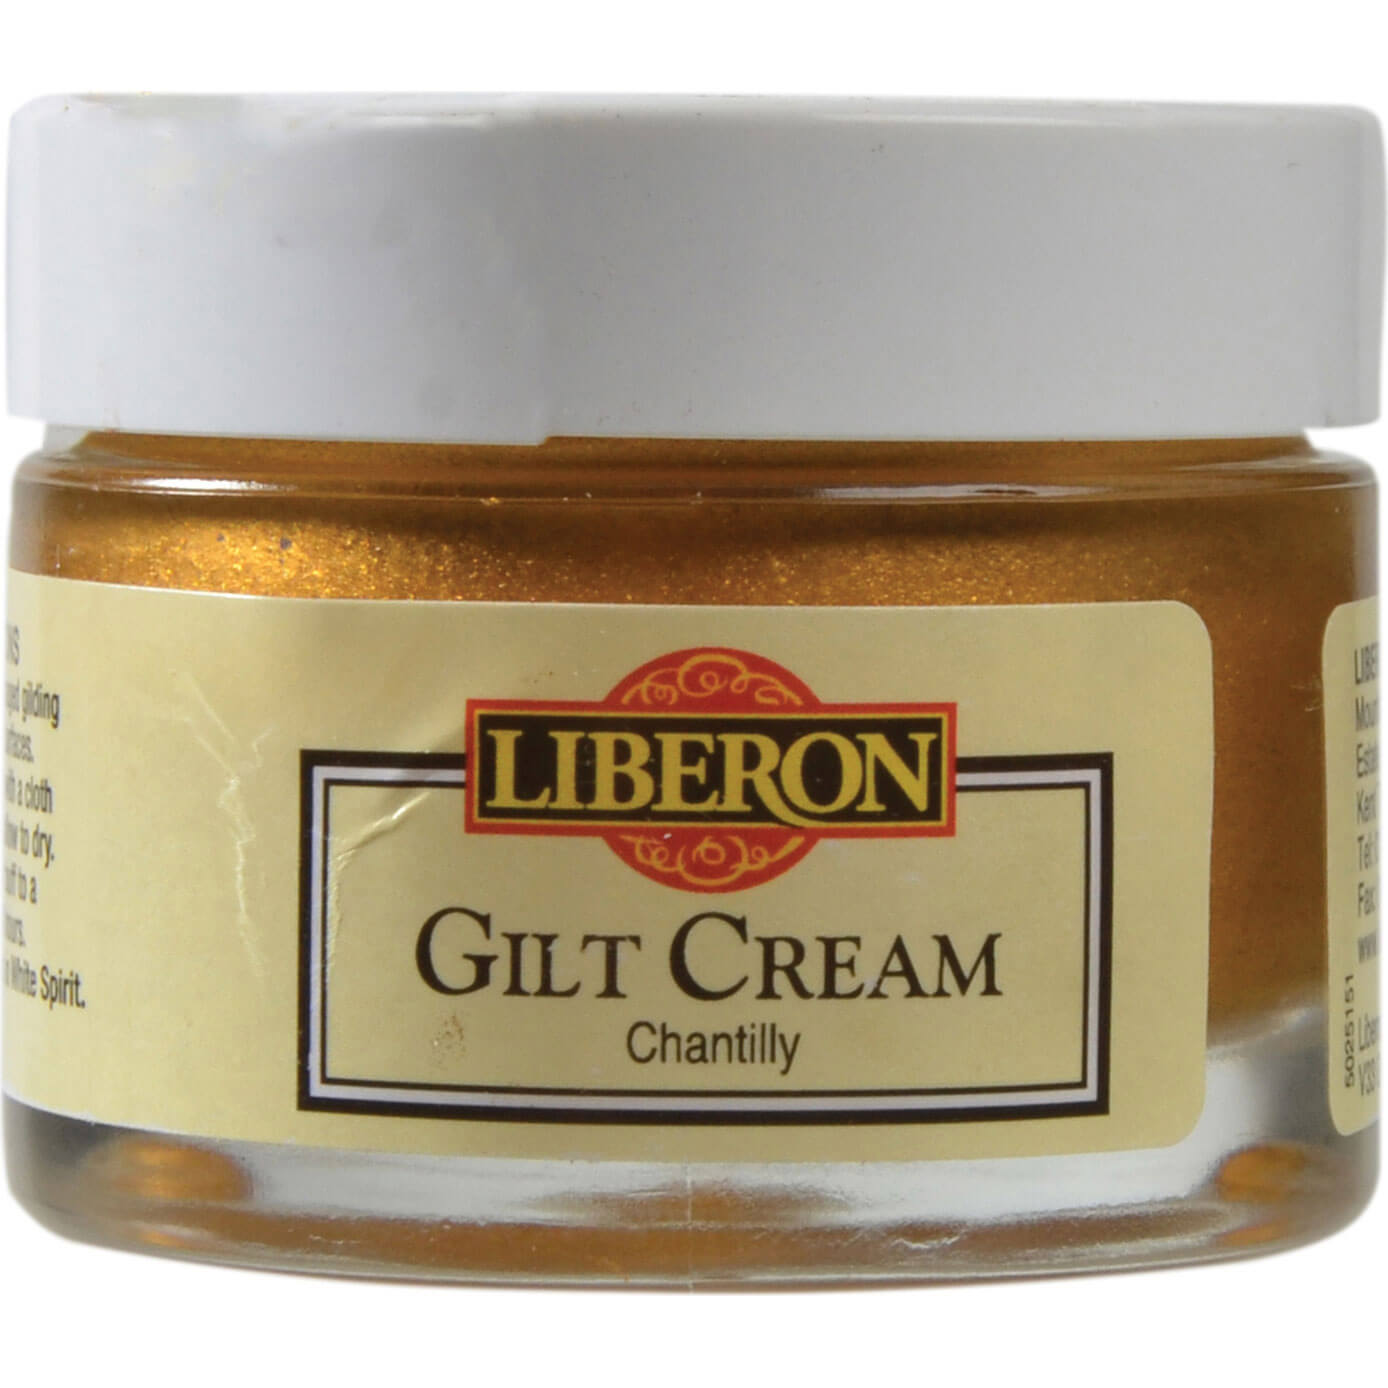 Image of Liberon Gilt Cream 30ml Chantilly